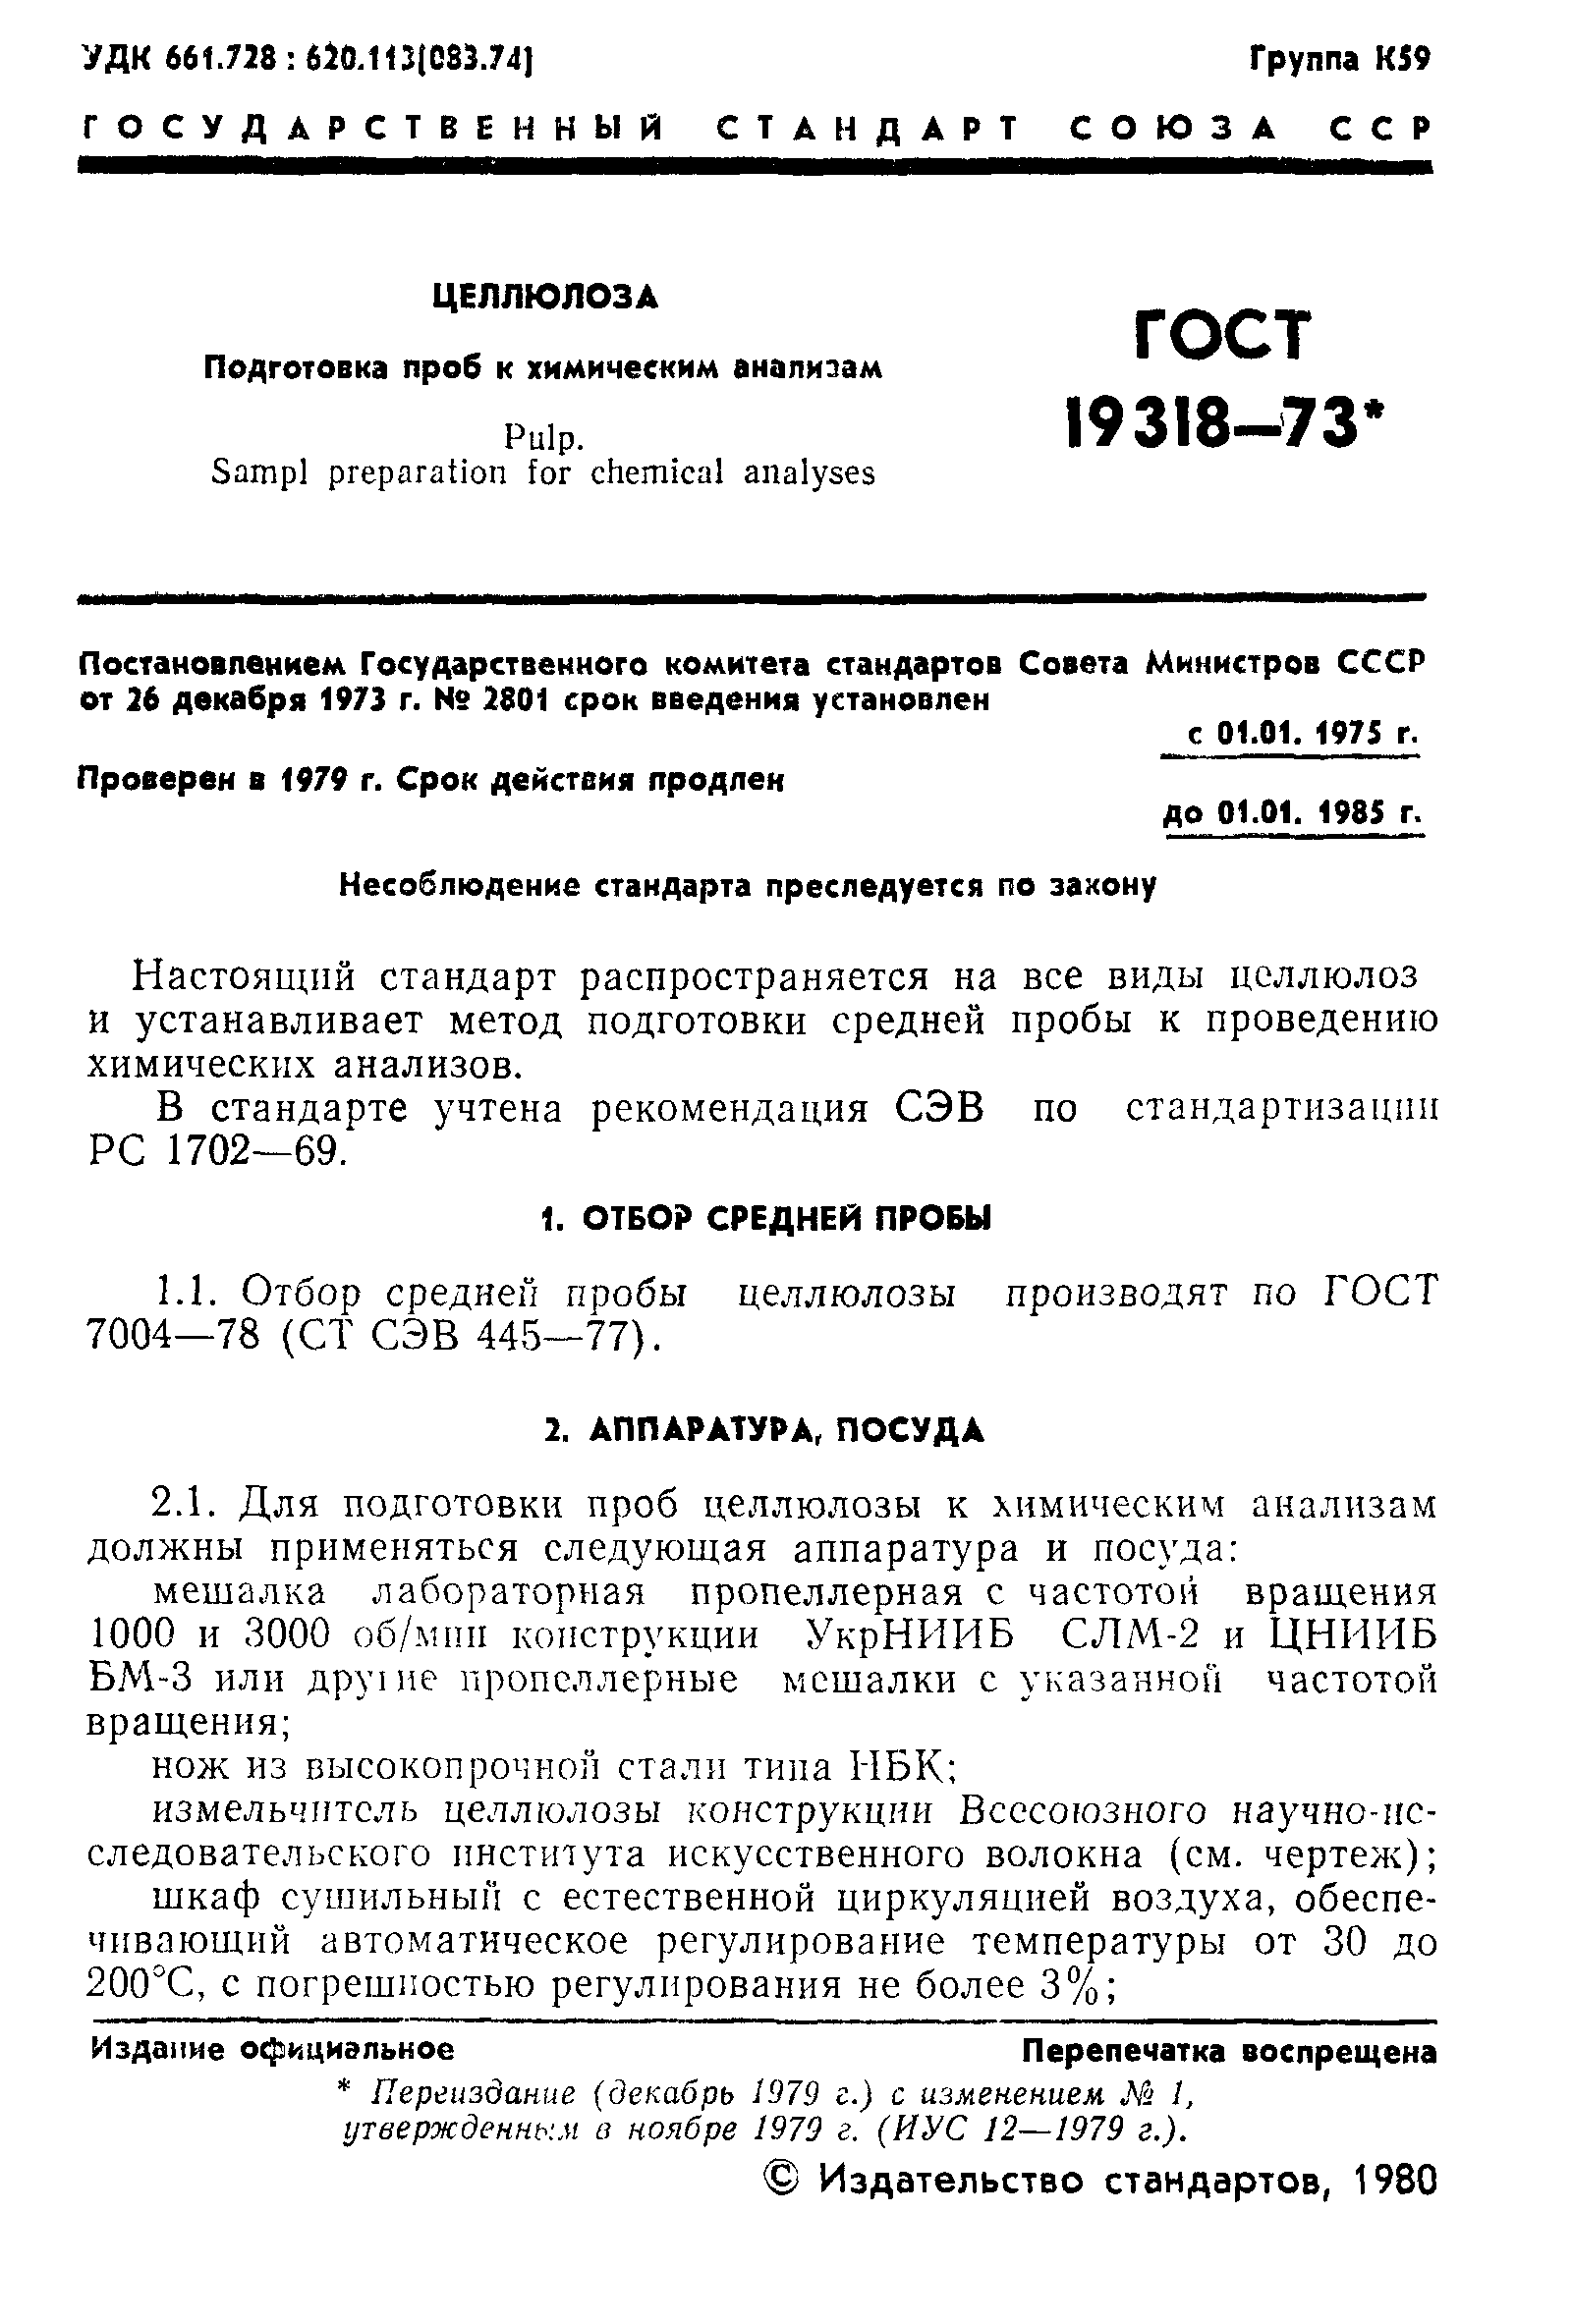 ГОСТ 19318-73